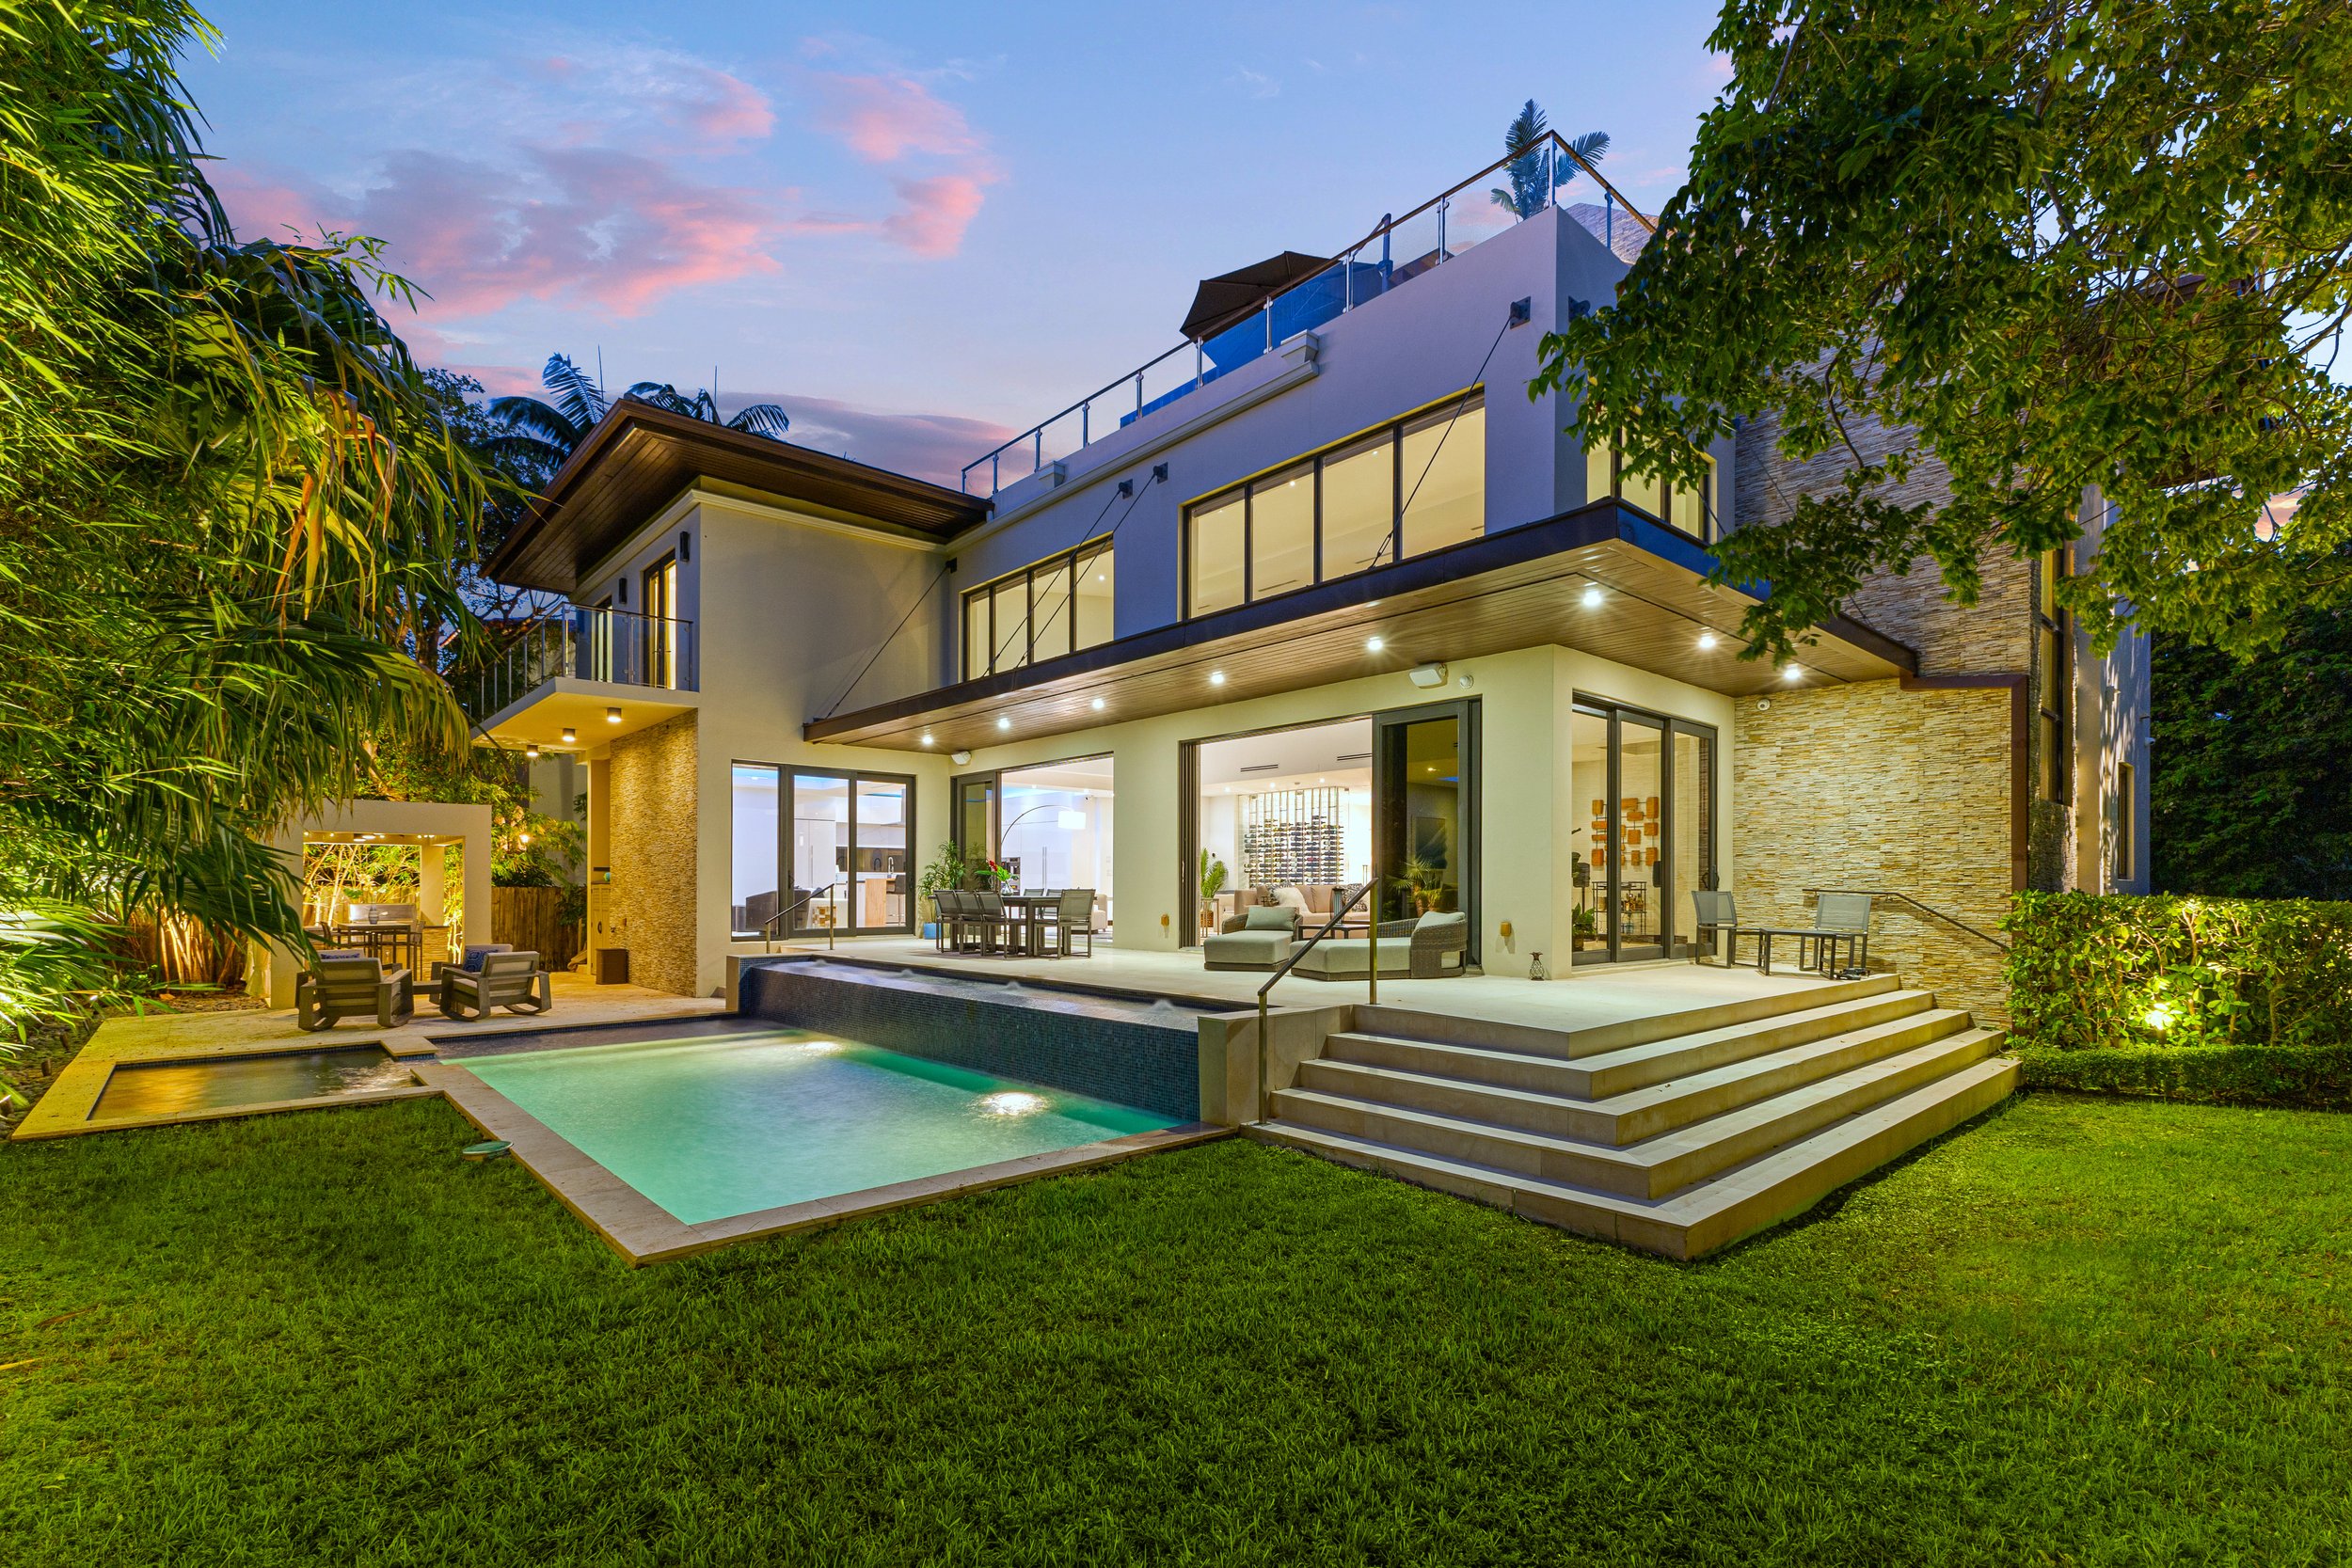 Key Biscayne Non-Waterfront Home on Mashta Island Sells For $7.3 Million 4.jpg